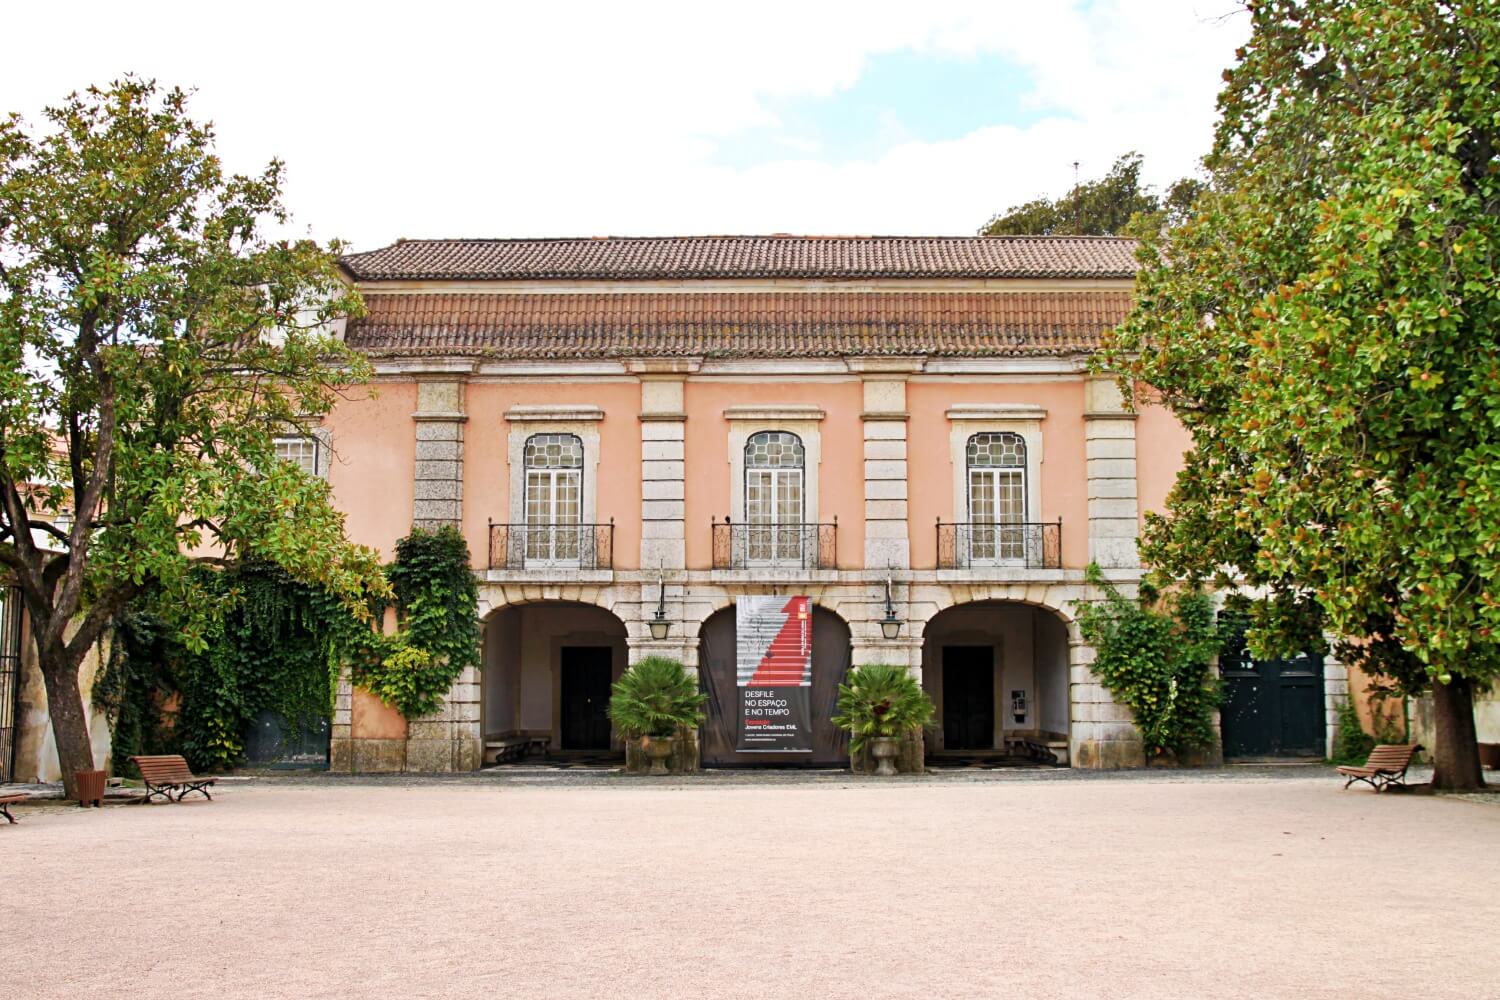 Monteiro-Mor Palace